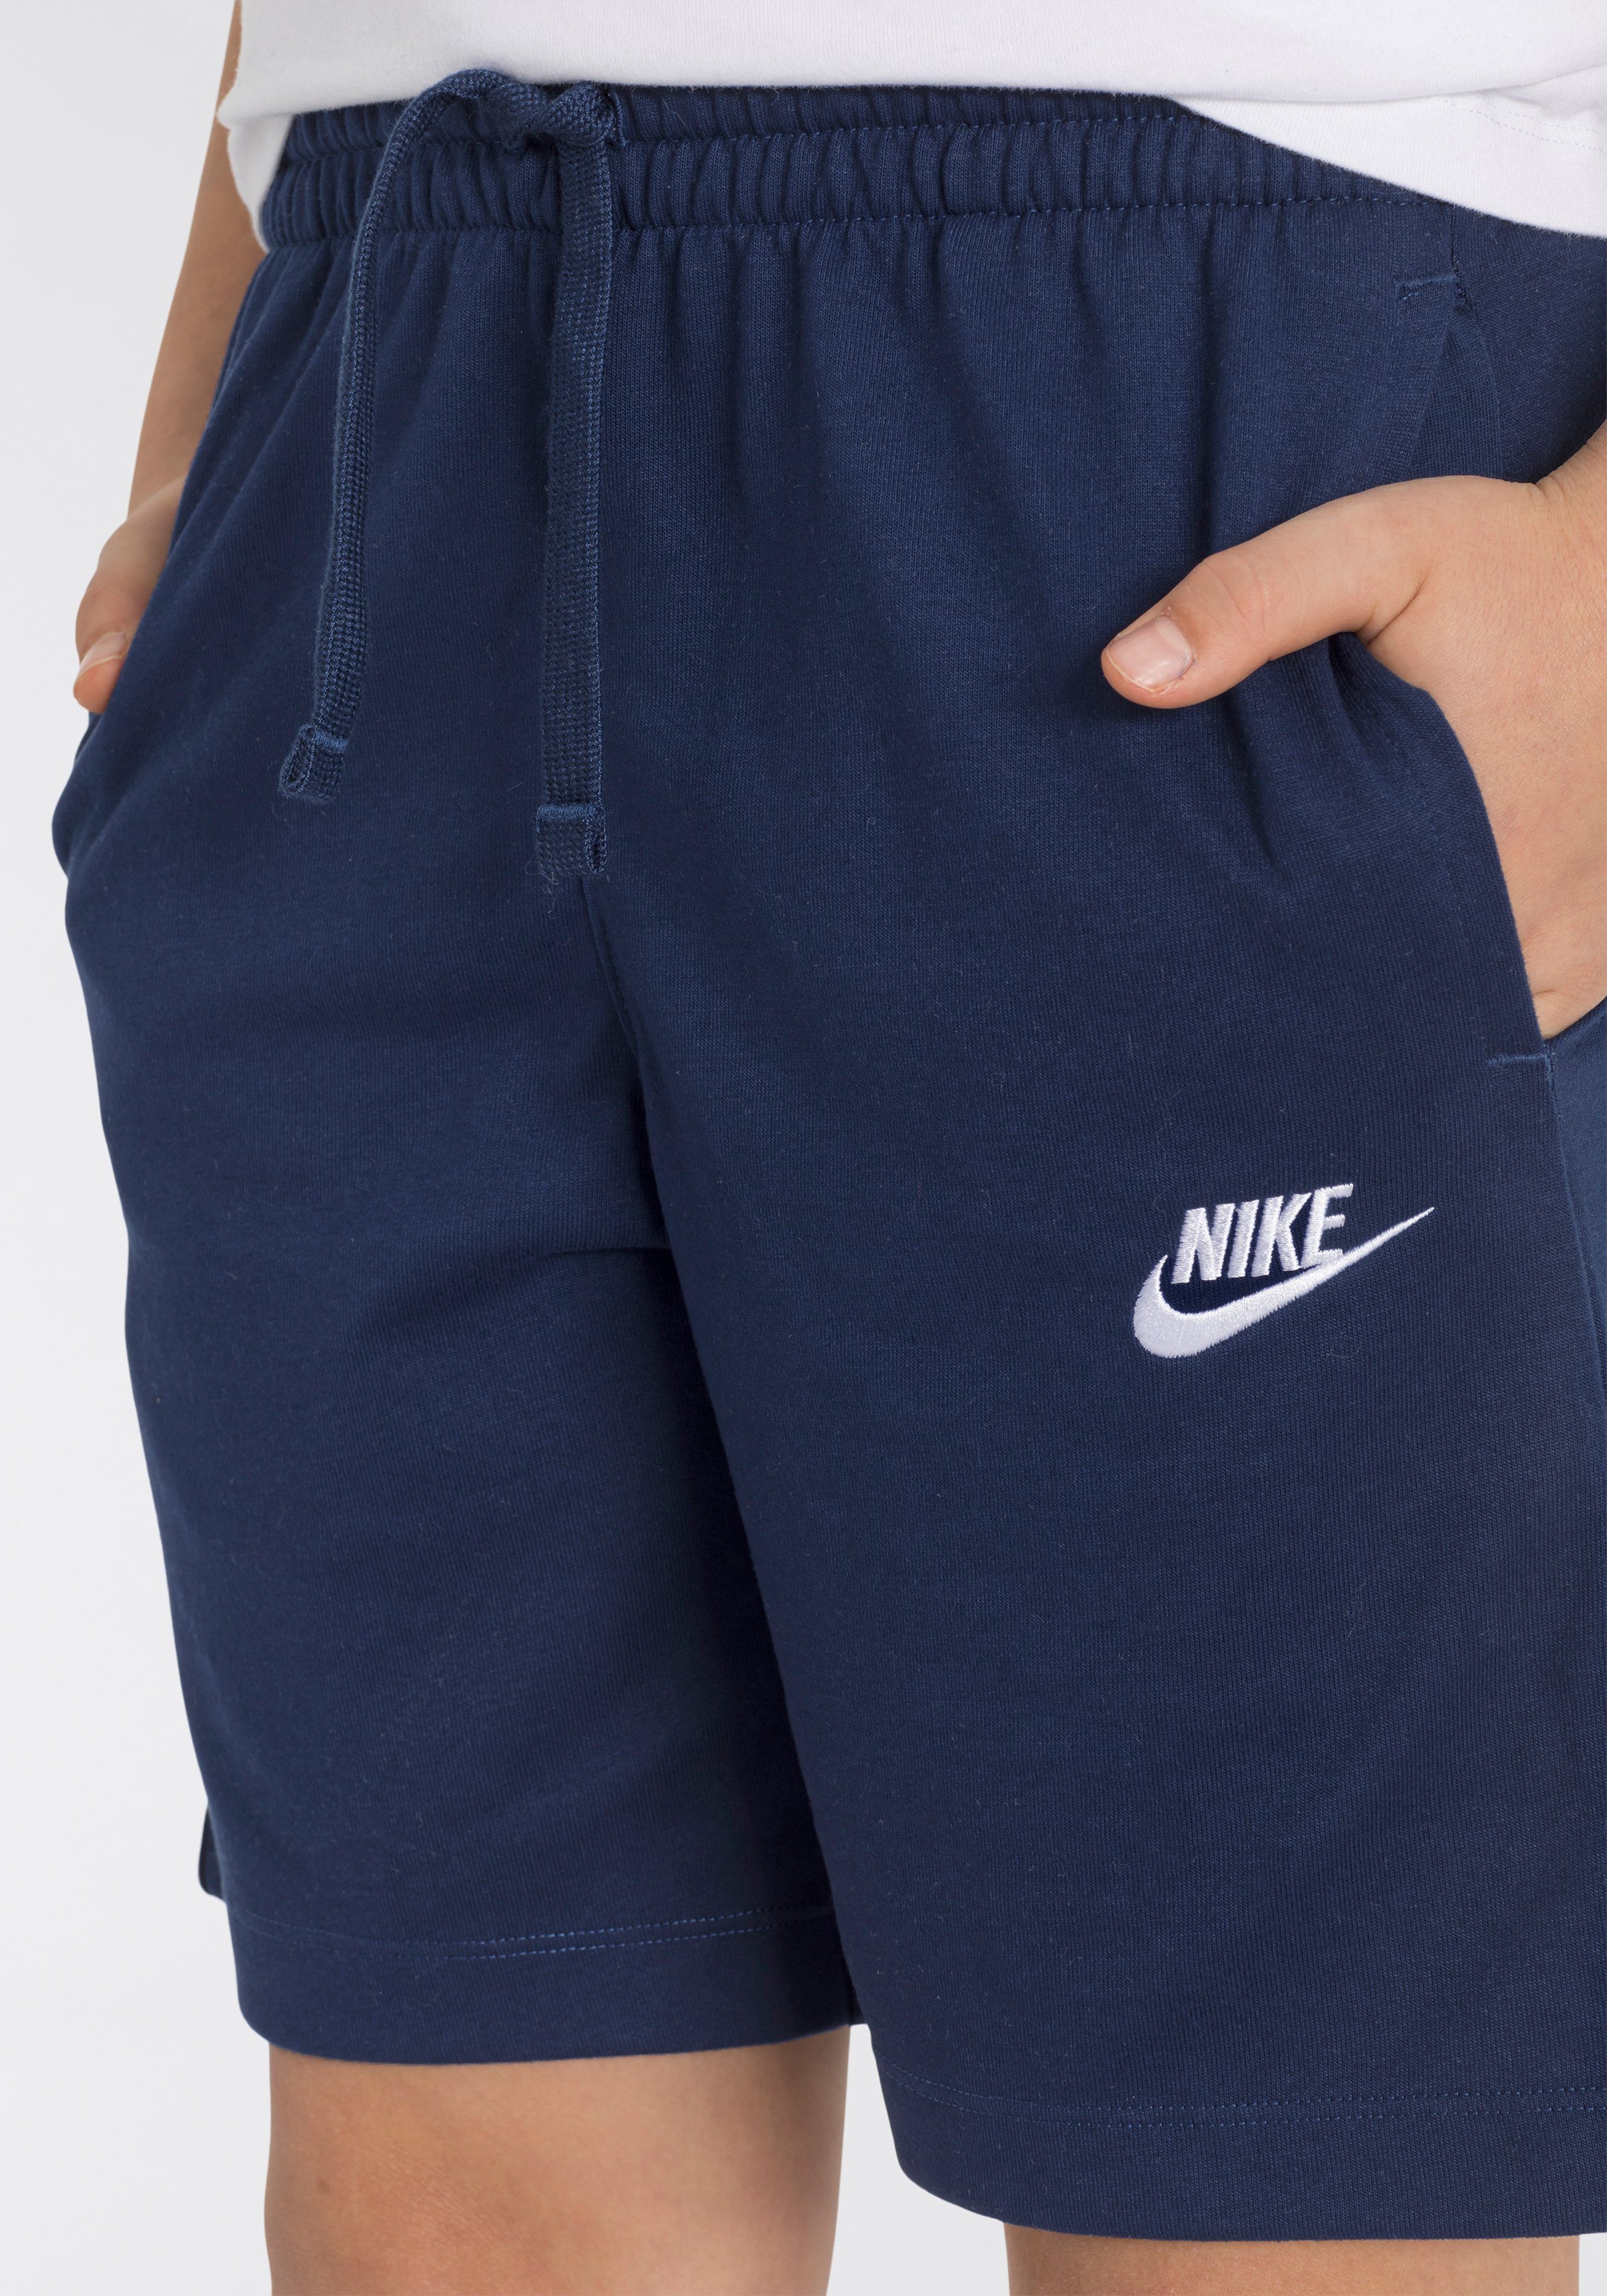 BIG KIDS' Shorts JERSEY Nike SHORTS dunkelblau Sportswear (BOYS)